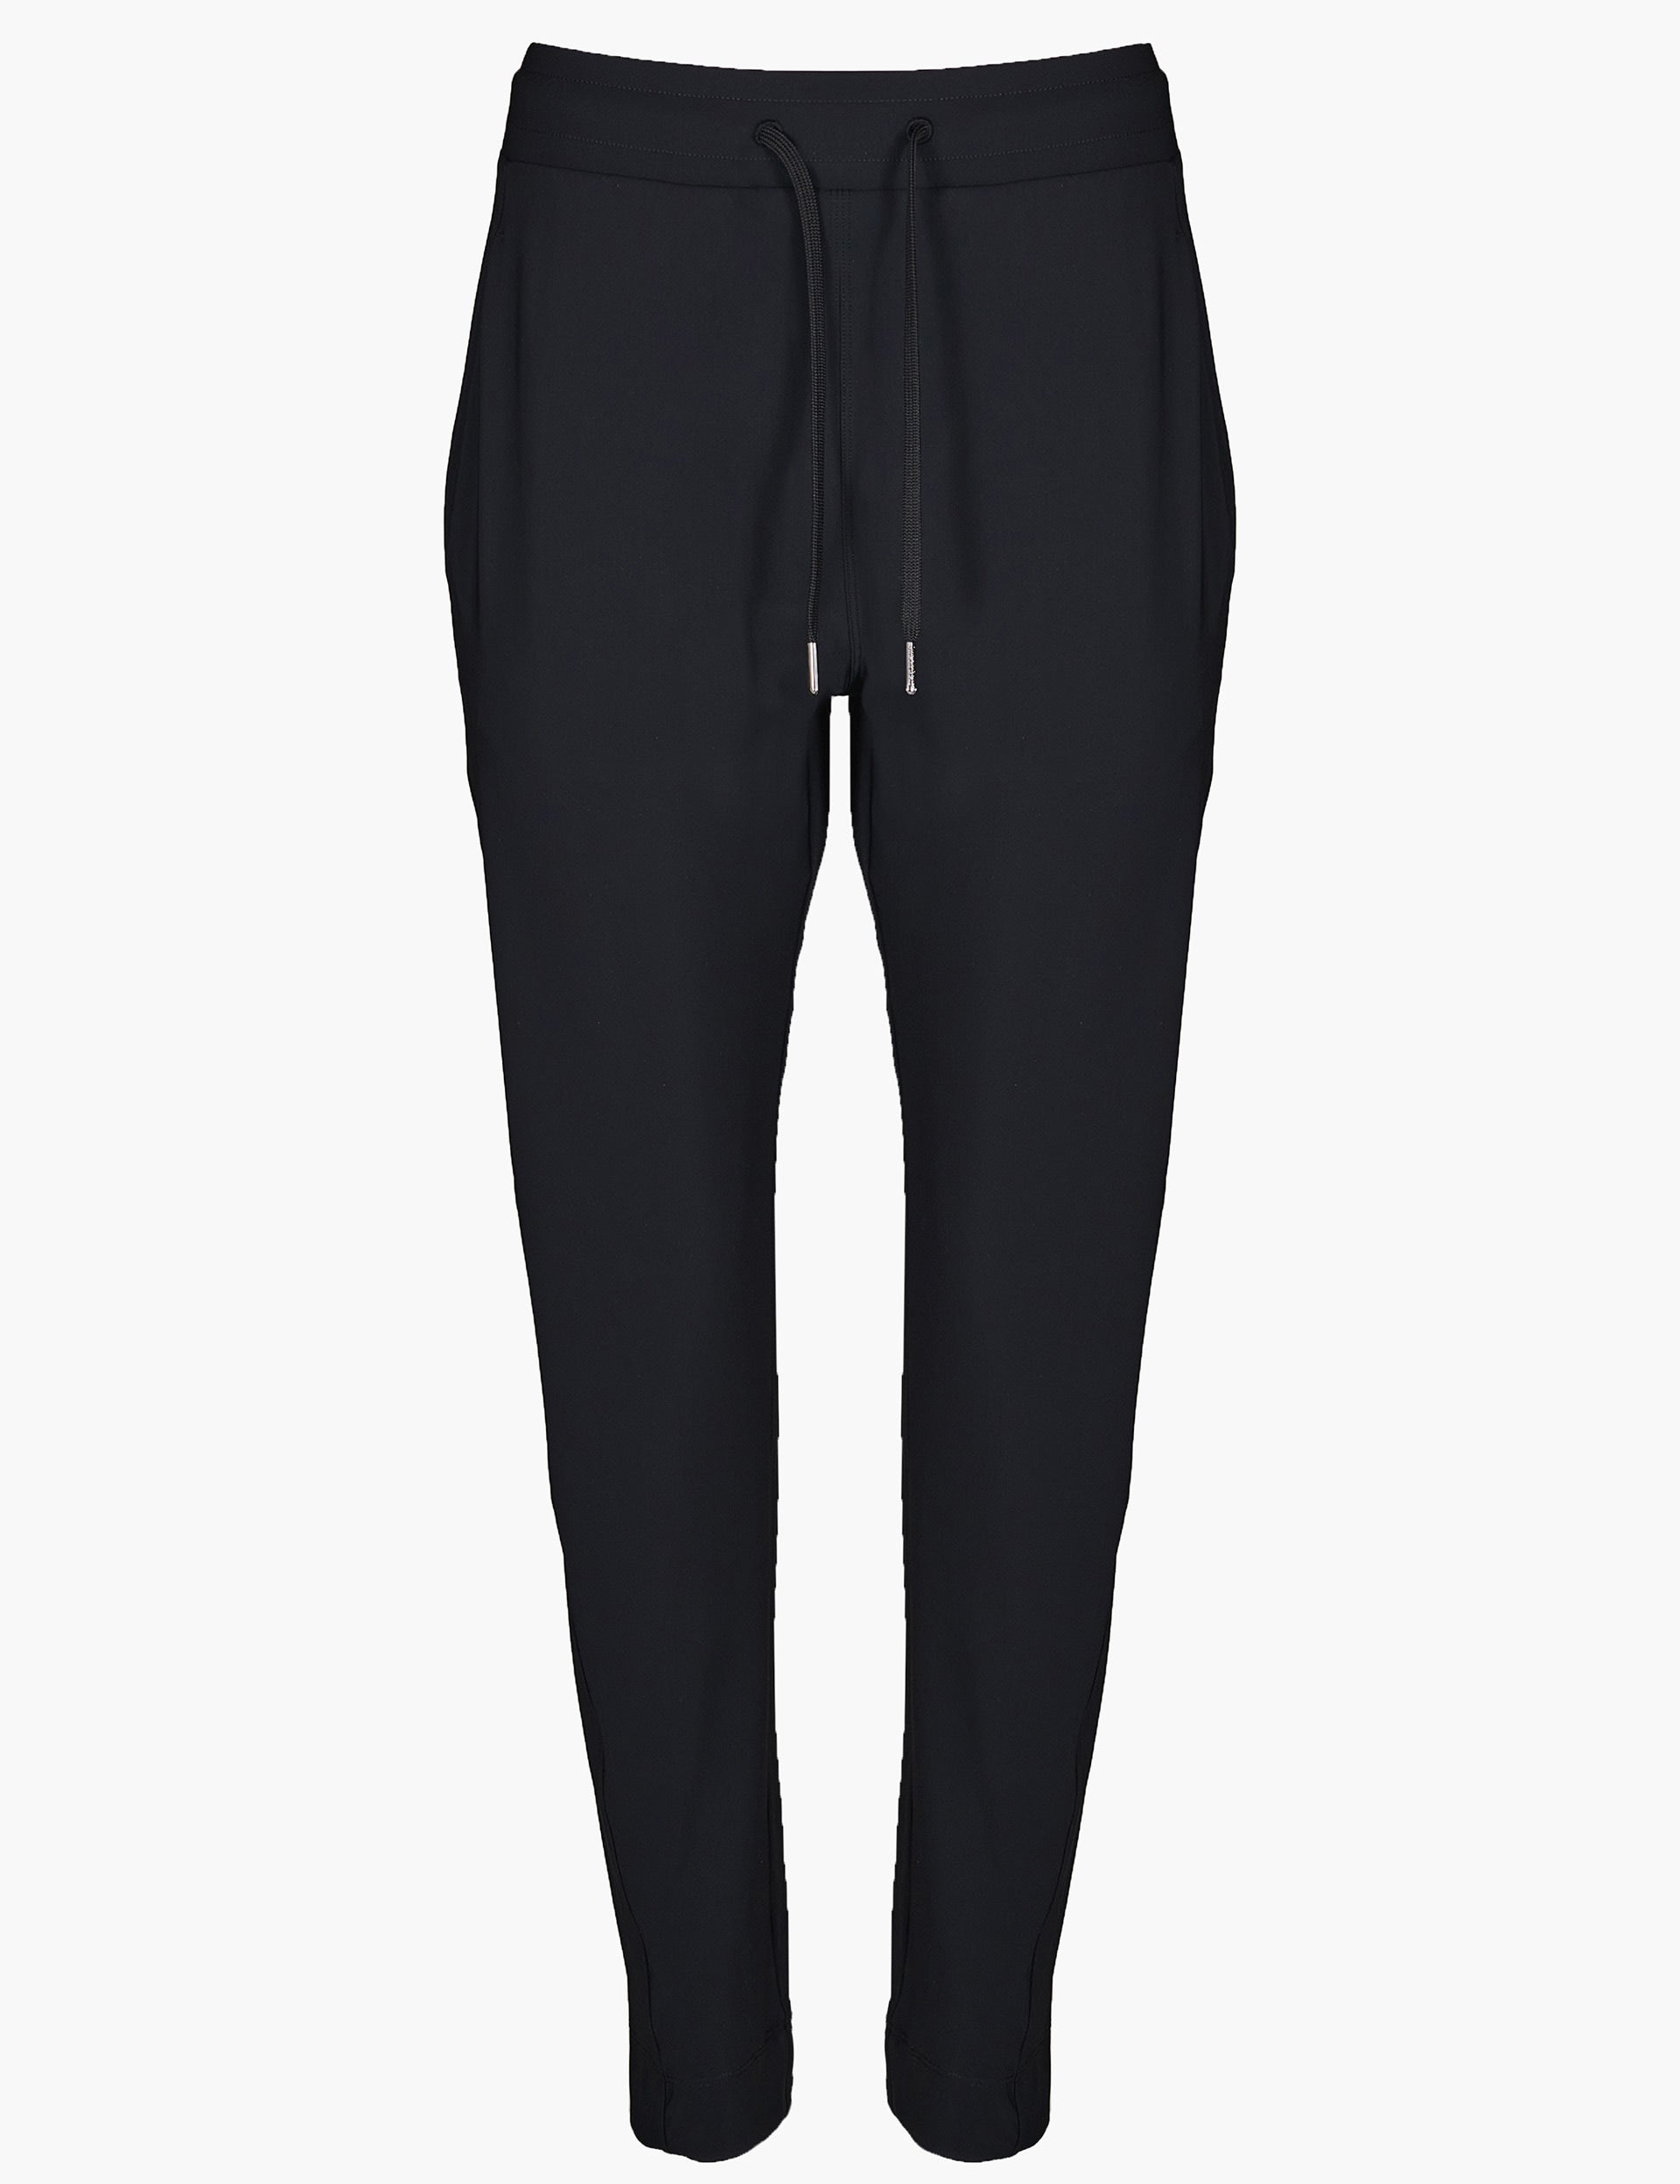 Winter Explorer Crop Flare Pants - Black, Women's Trousers & Yoga Pants